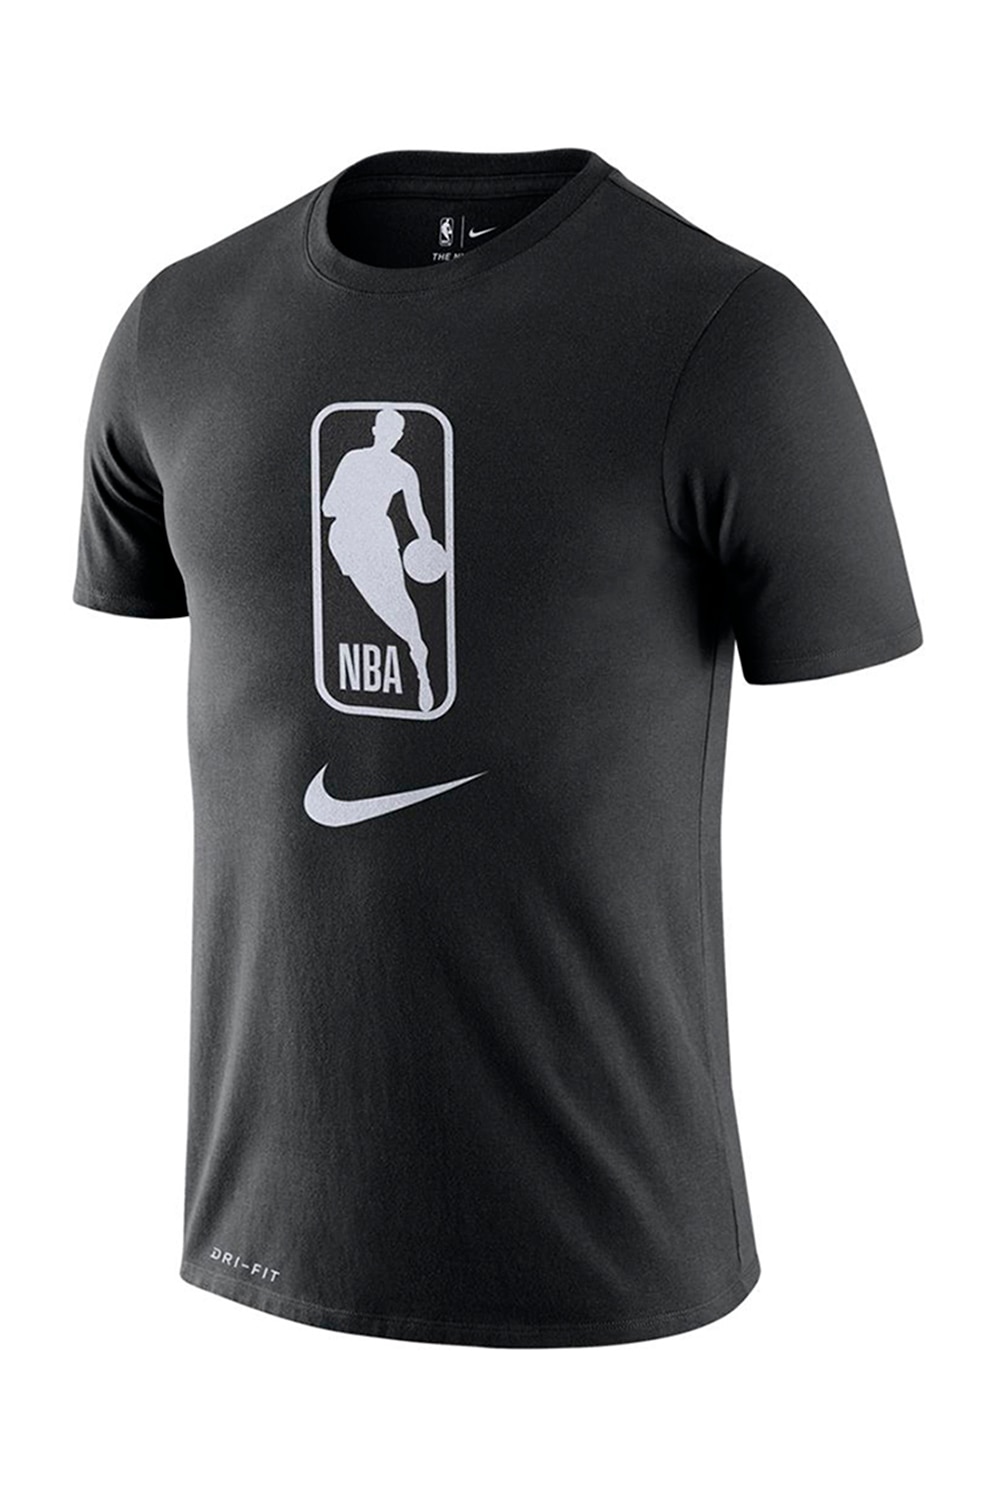 Nike, Tricou decolteu la baza gatului si NBA, - eMAG.ro